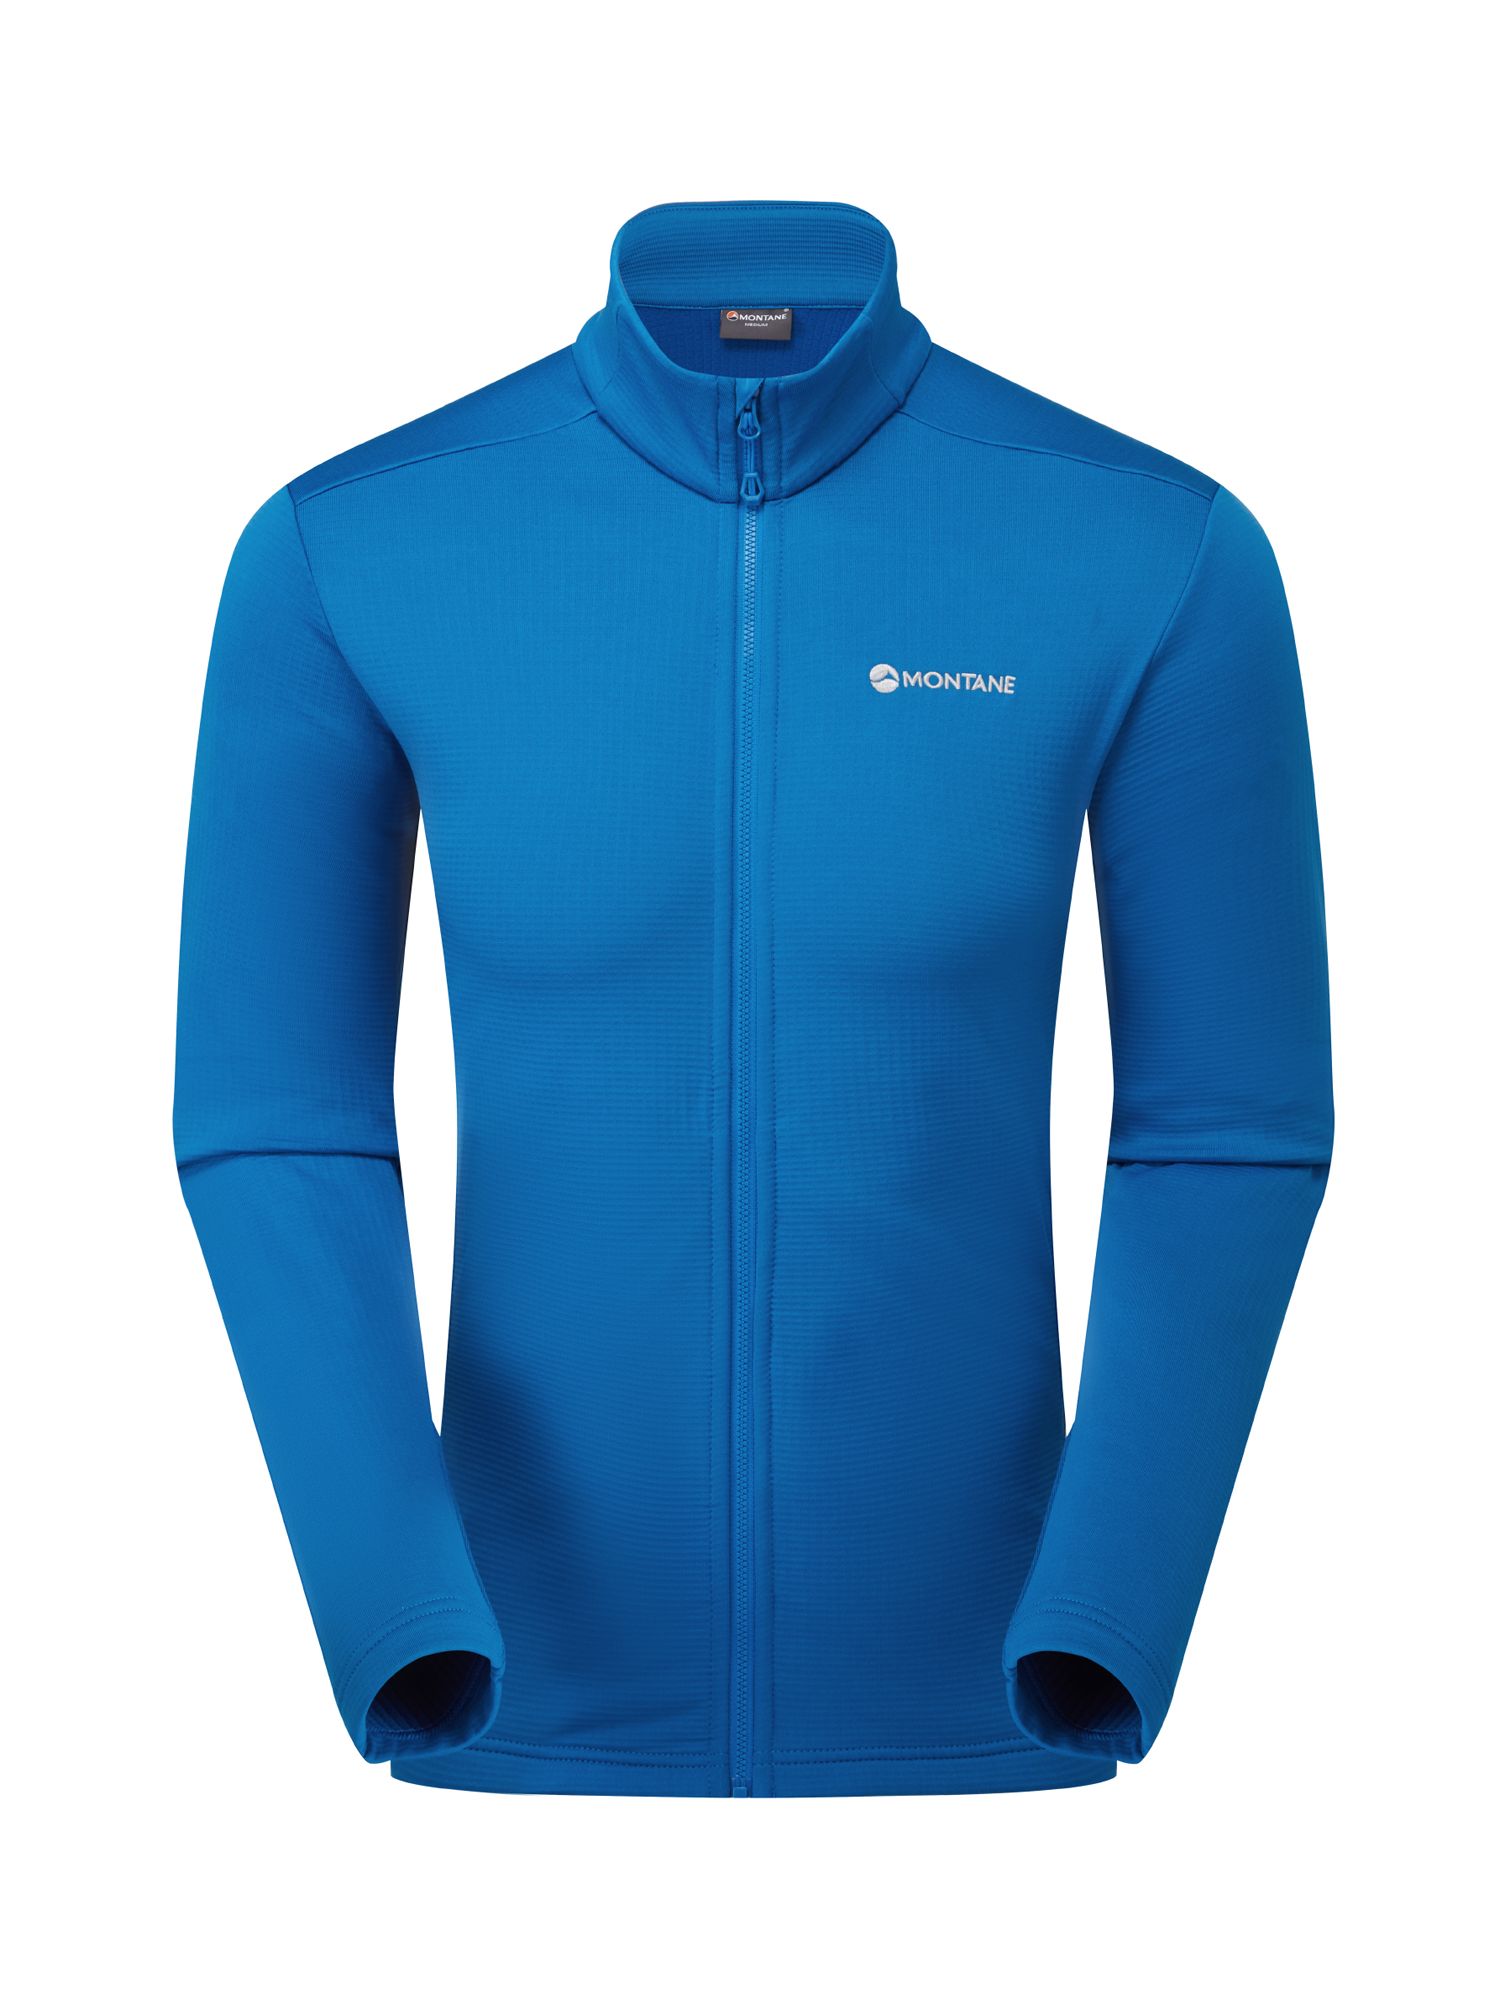 Montane Protium Lightweight Breathable Jacket, Neptune Blue, S